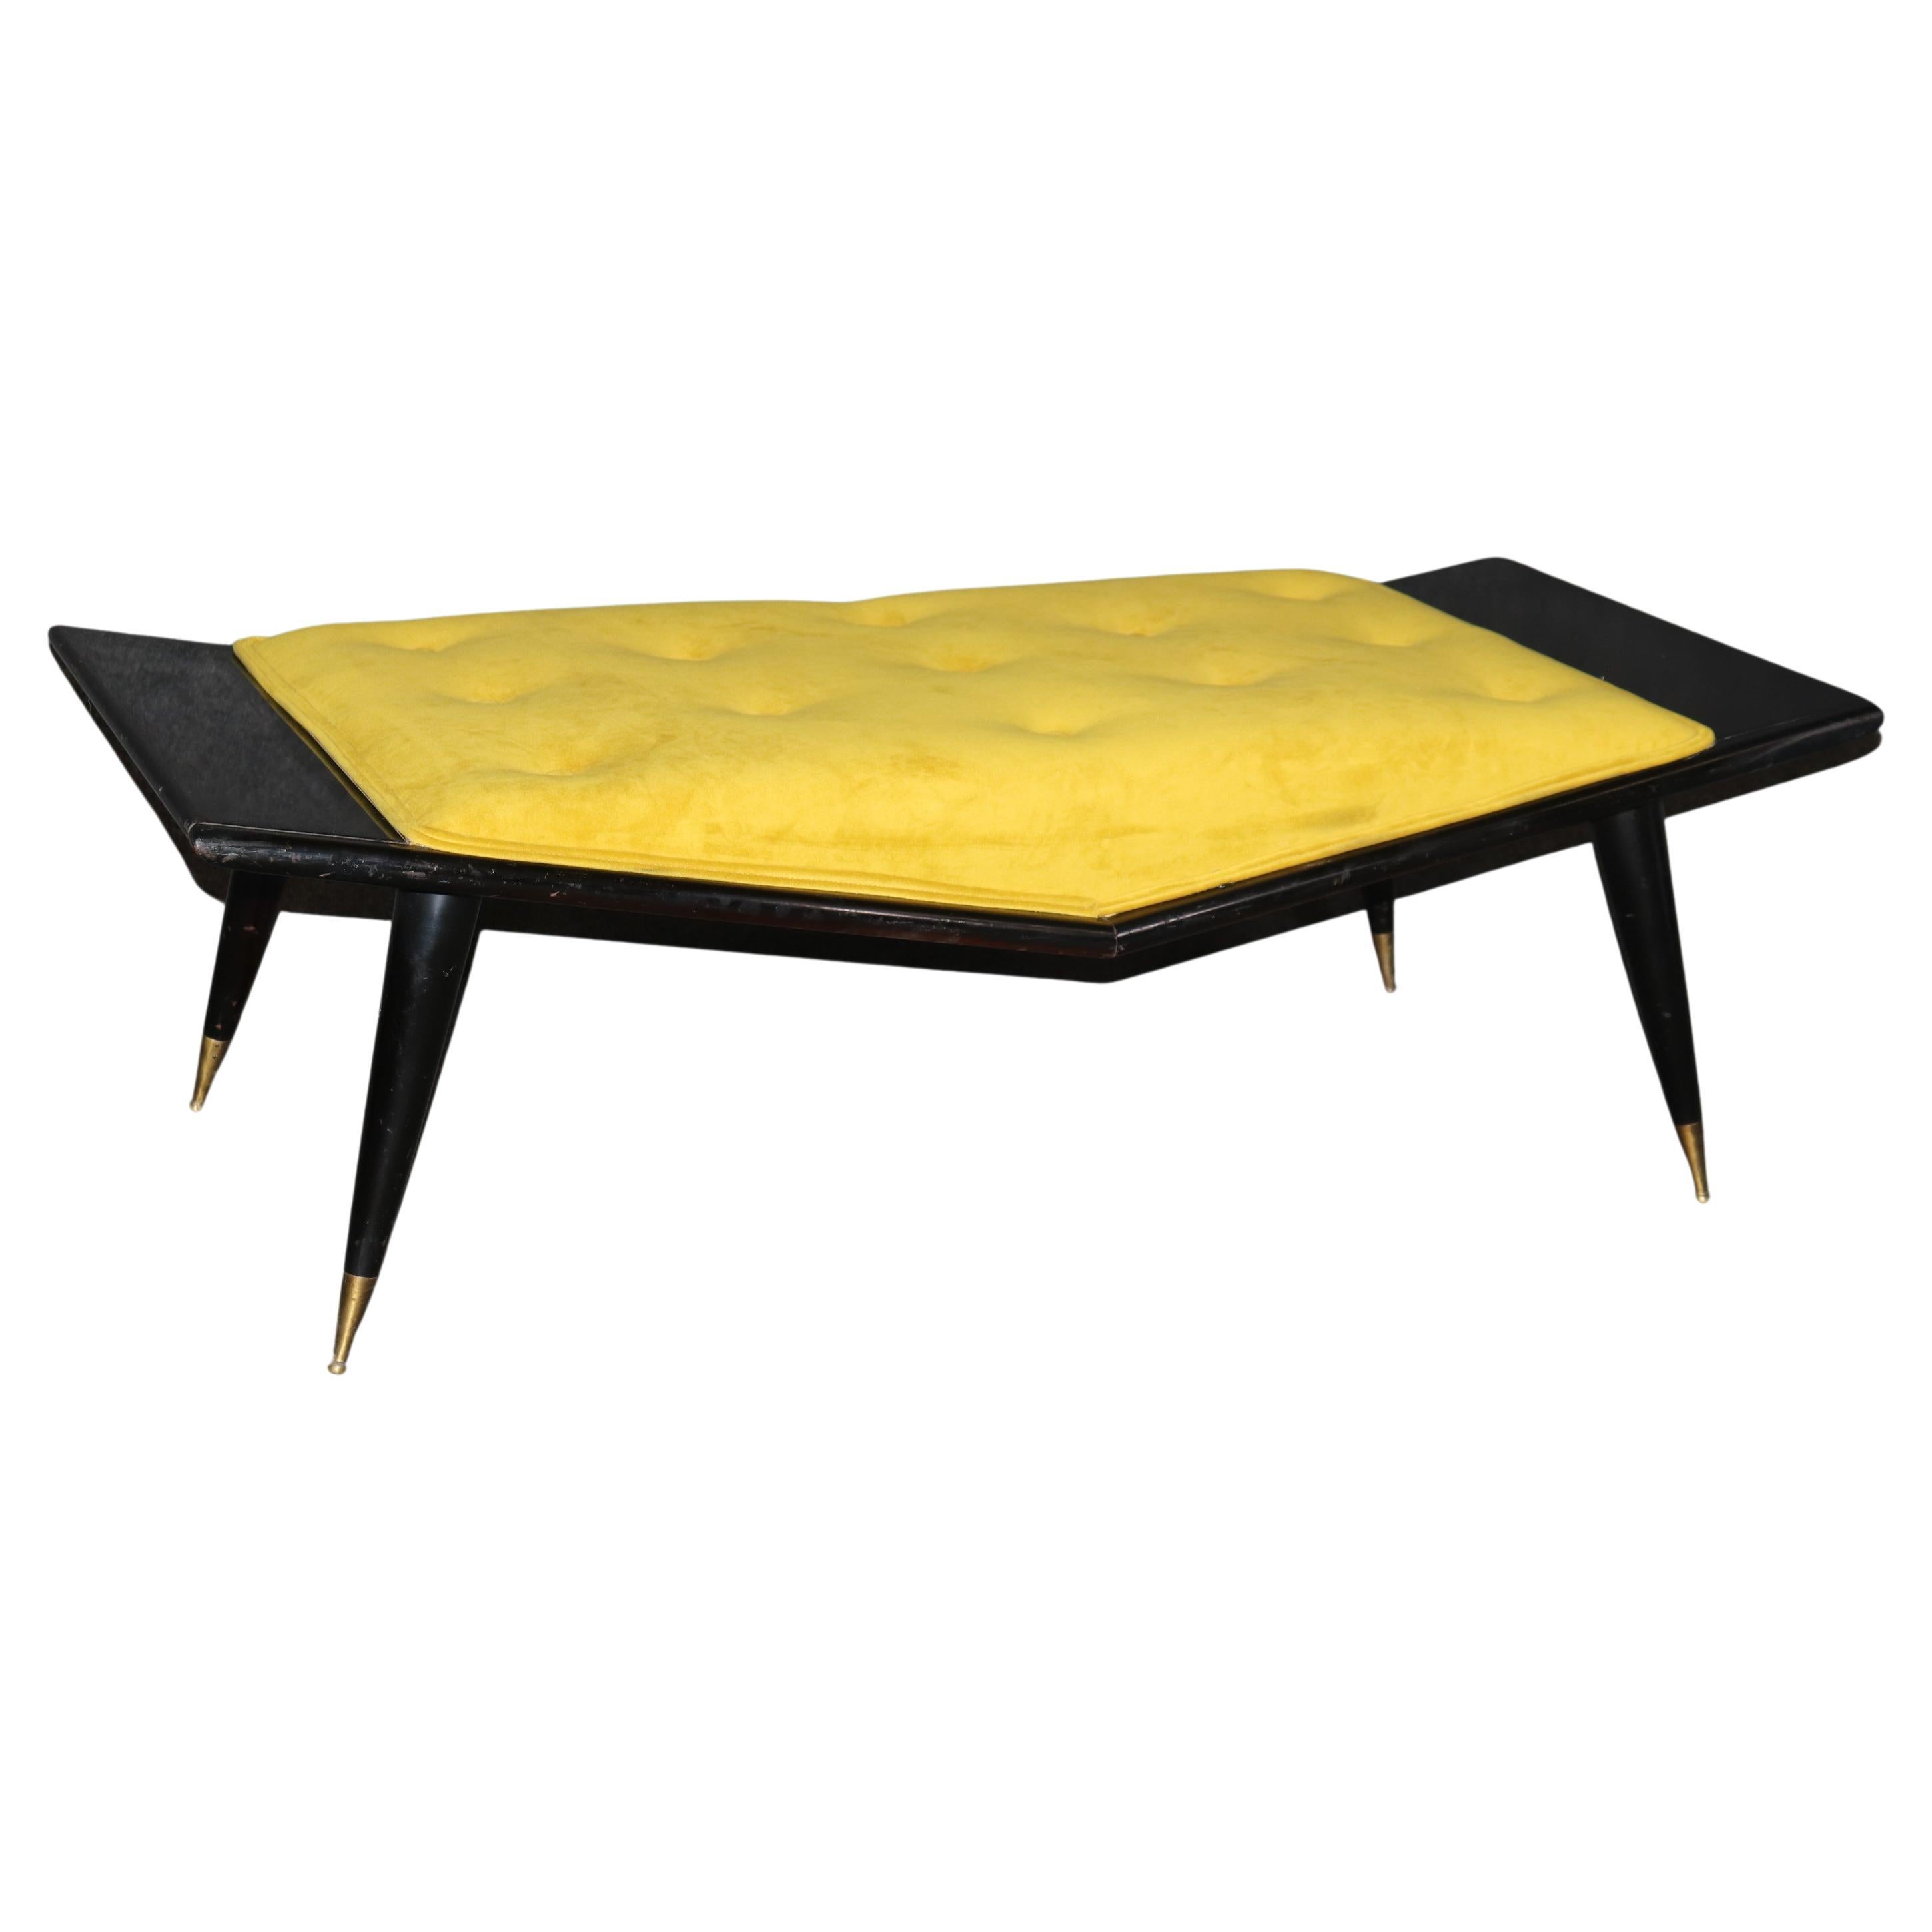 Ebonized Mid Century Modern Gio Ponti Style Bench With Tufted Upholstery